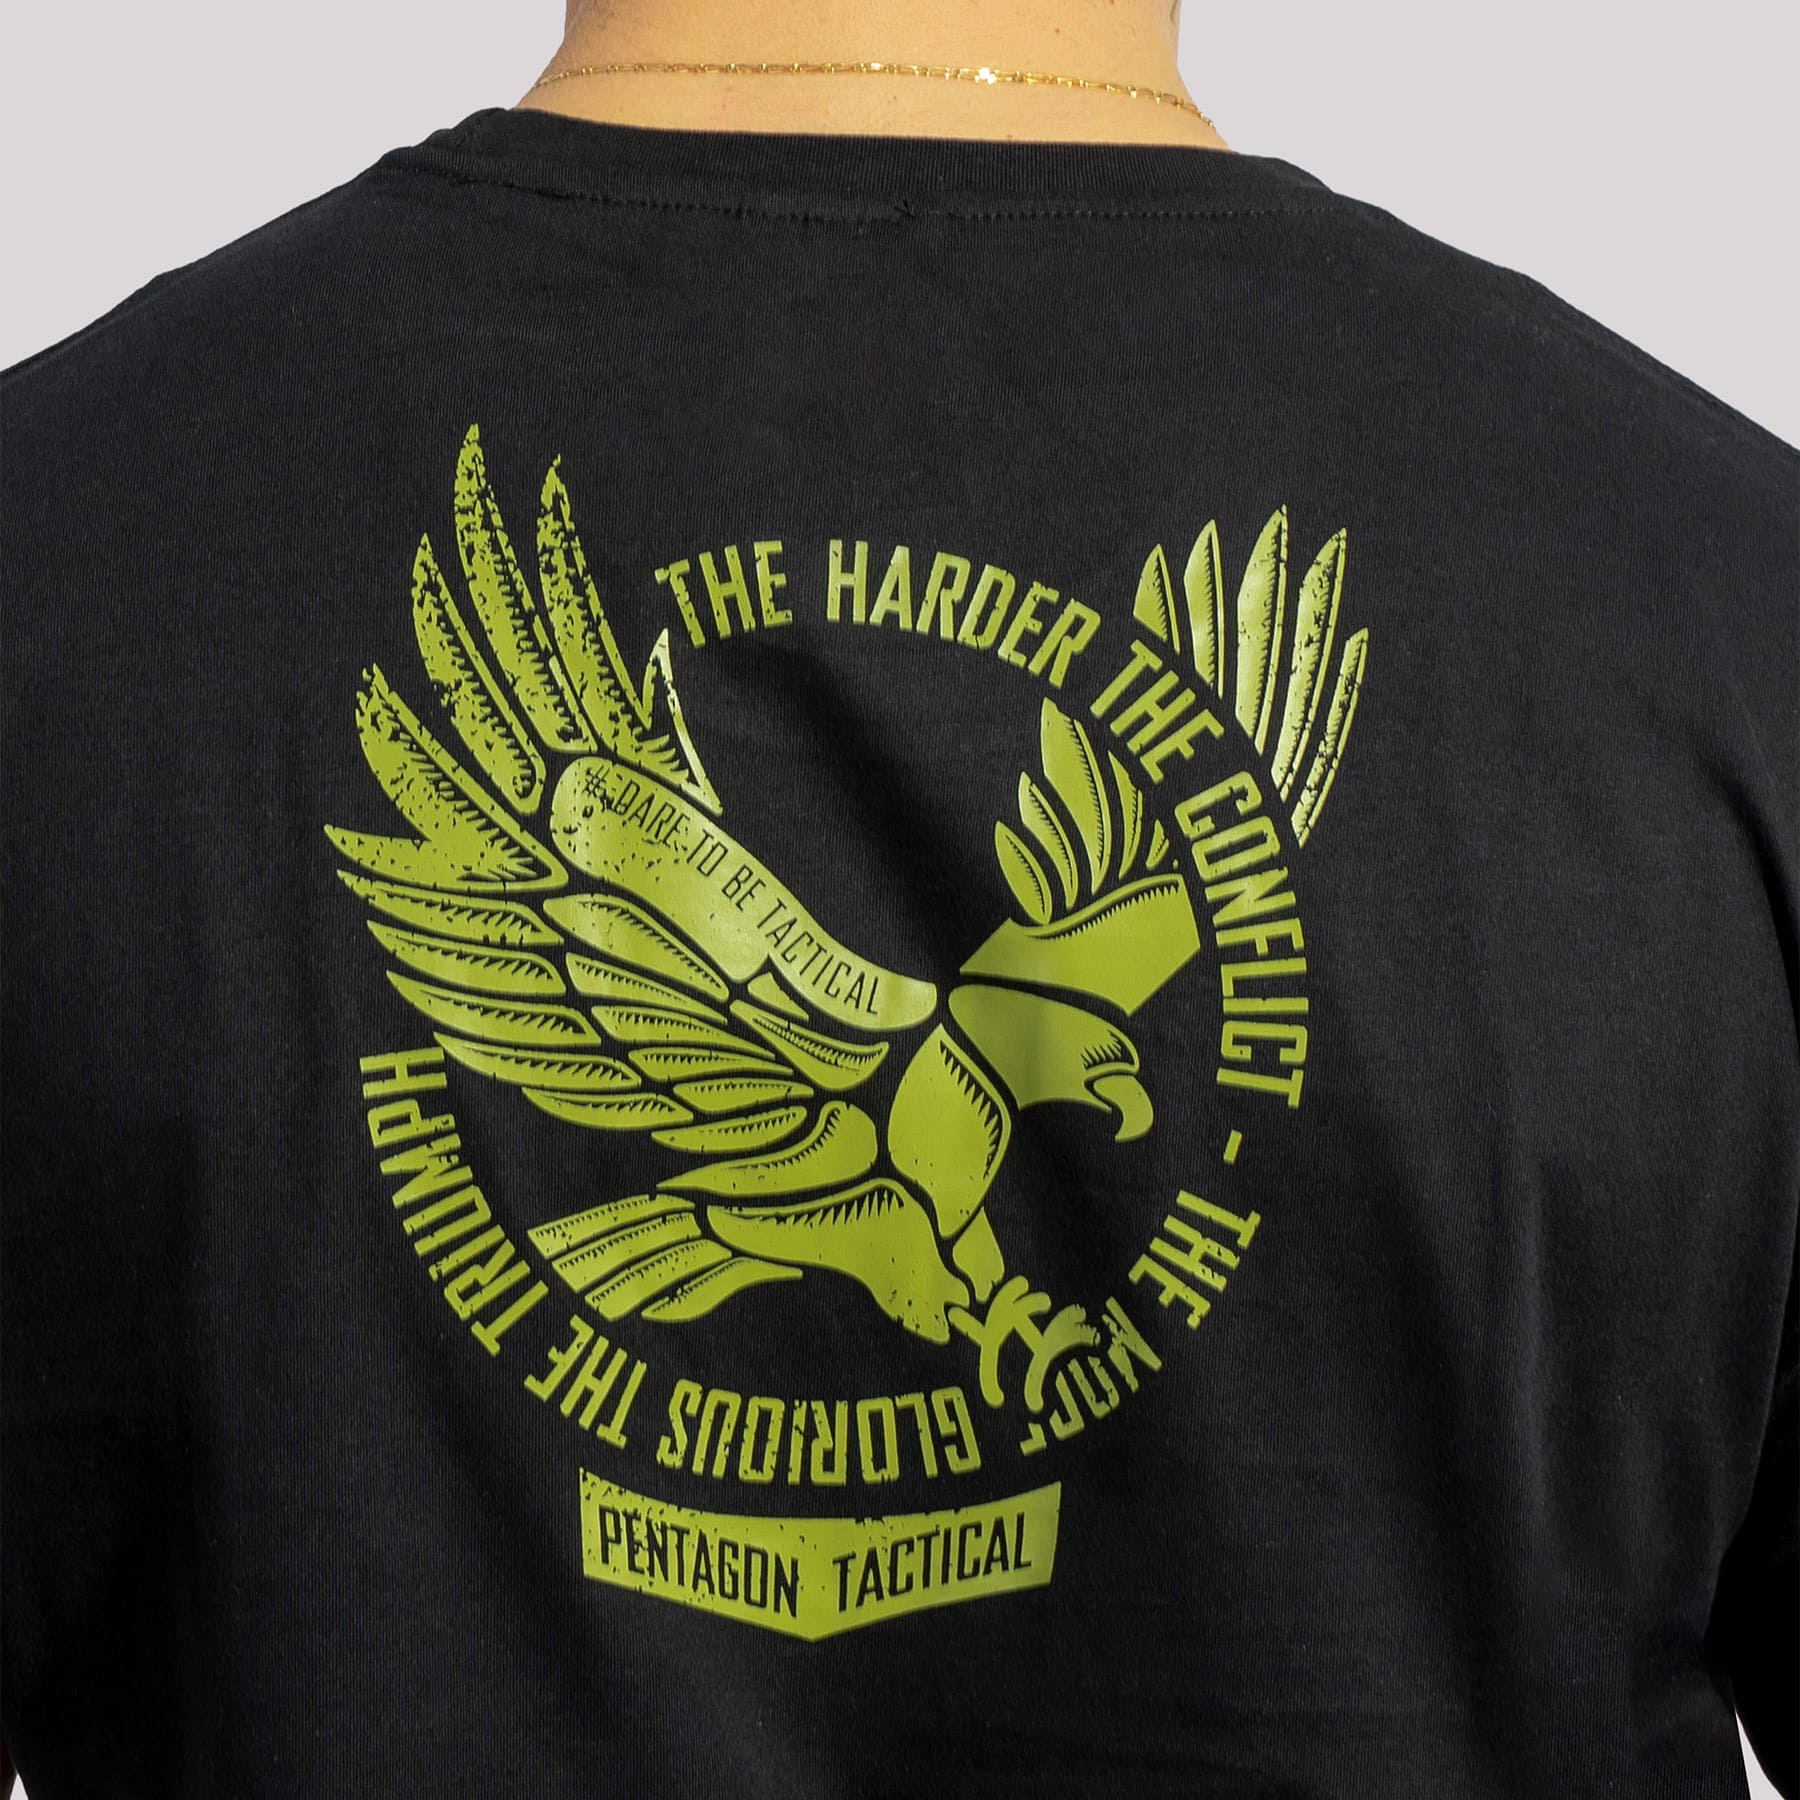 Ageron Eagle T-Shirt Detail